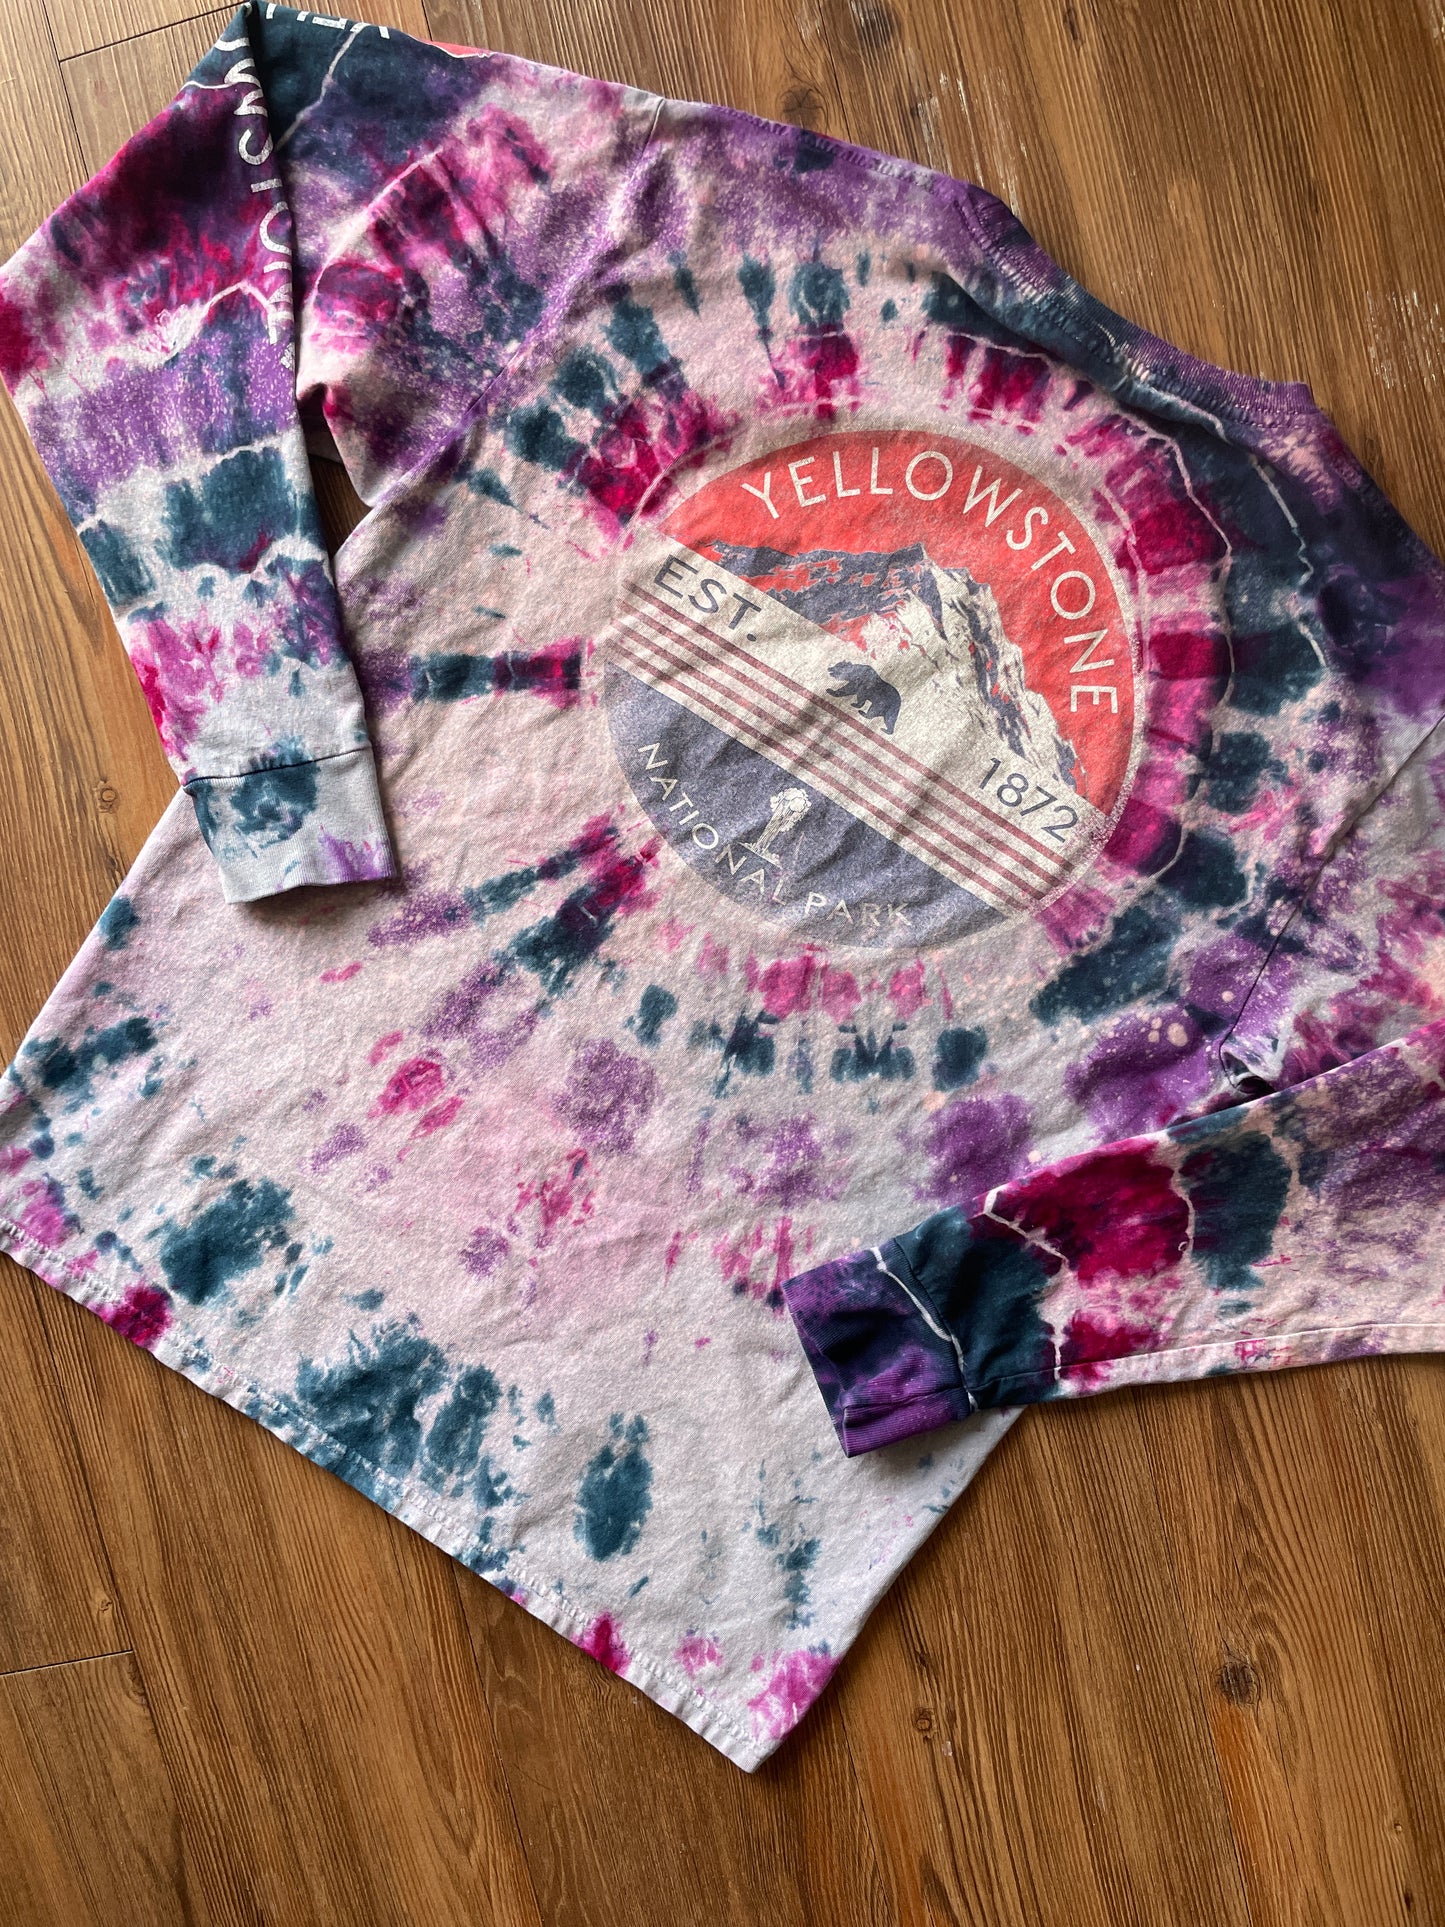 MEDIUM Men’s Yellowstone National Park Handmade Galaxy Geode Tie Dye T-Shirt | Blue, Purple, and Pink Long Sleeve Tee